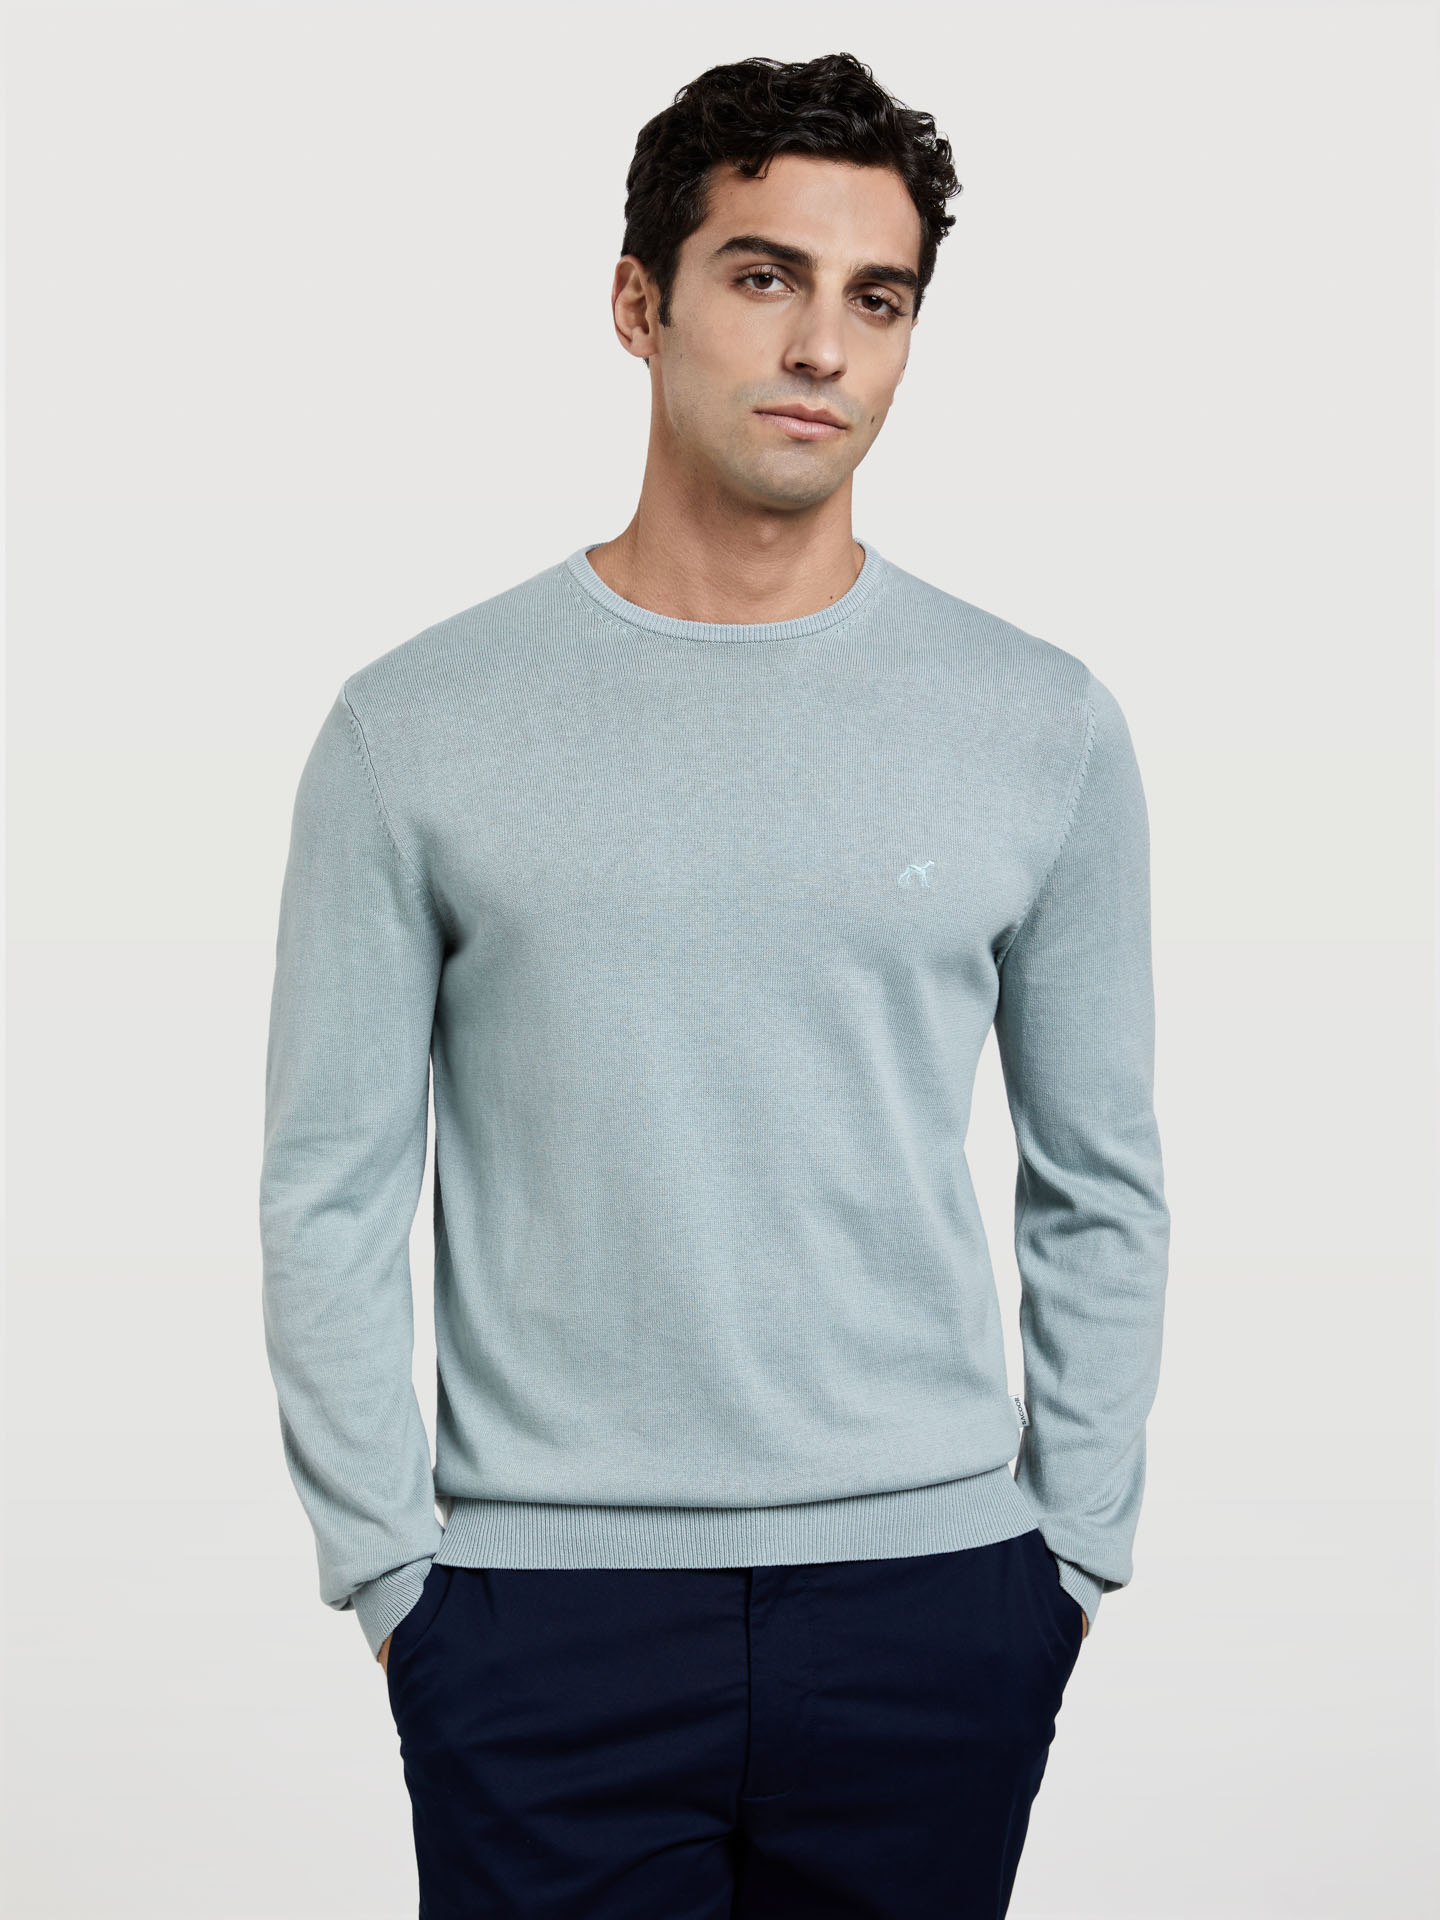 Sweater Mint Casual Man